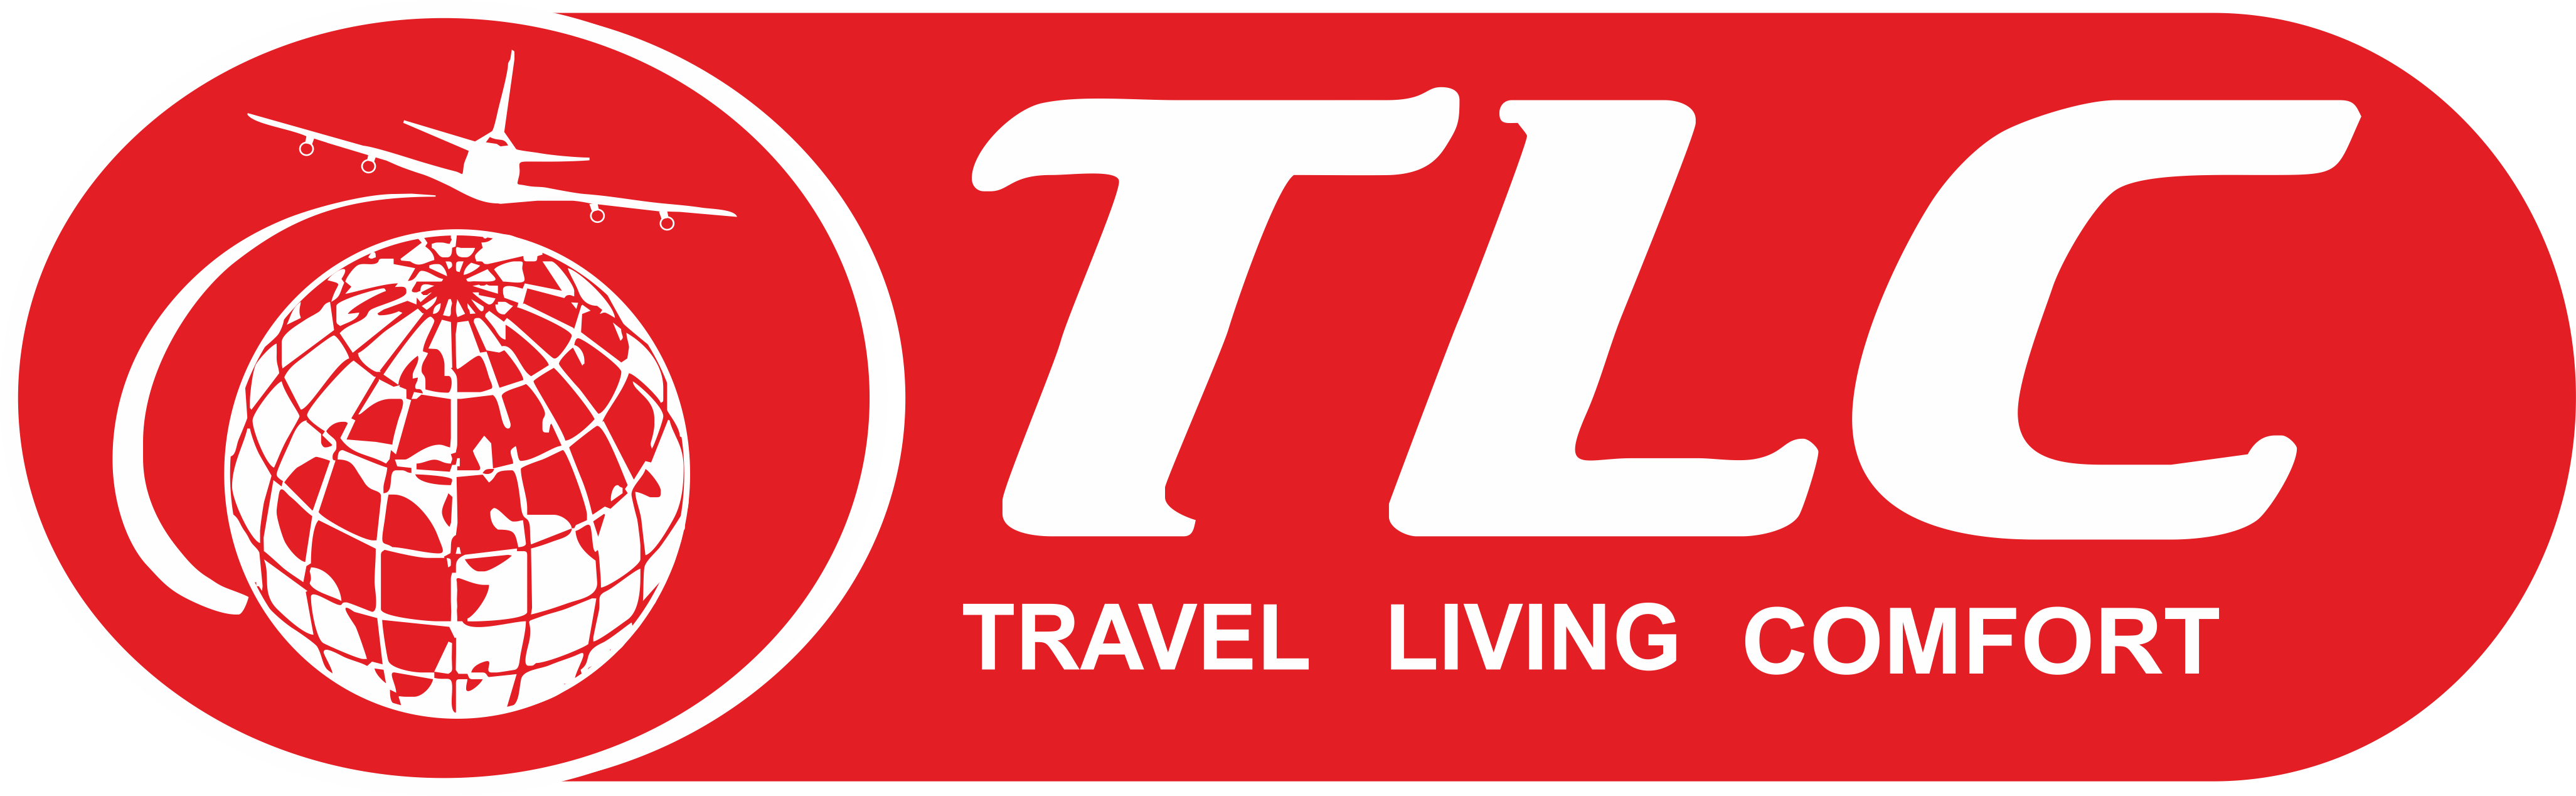 Tlc Travel